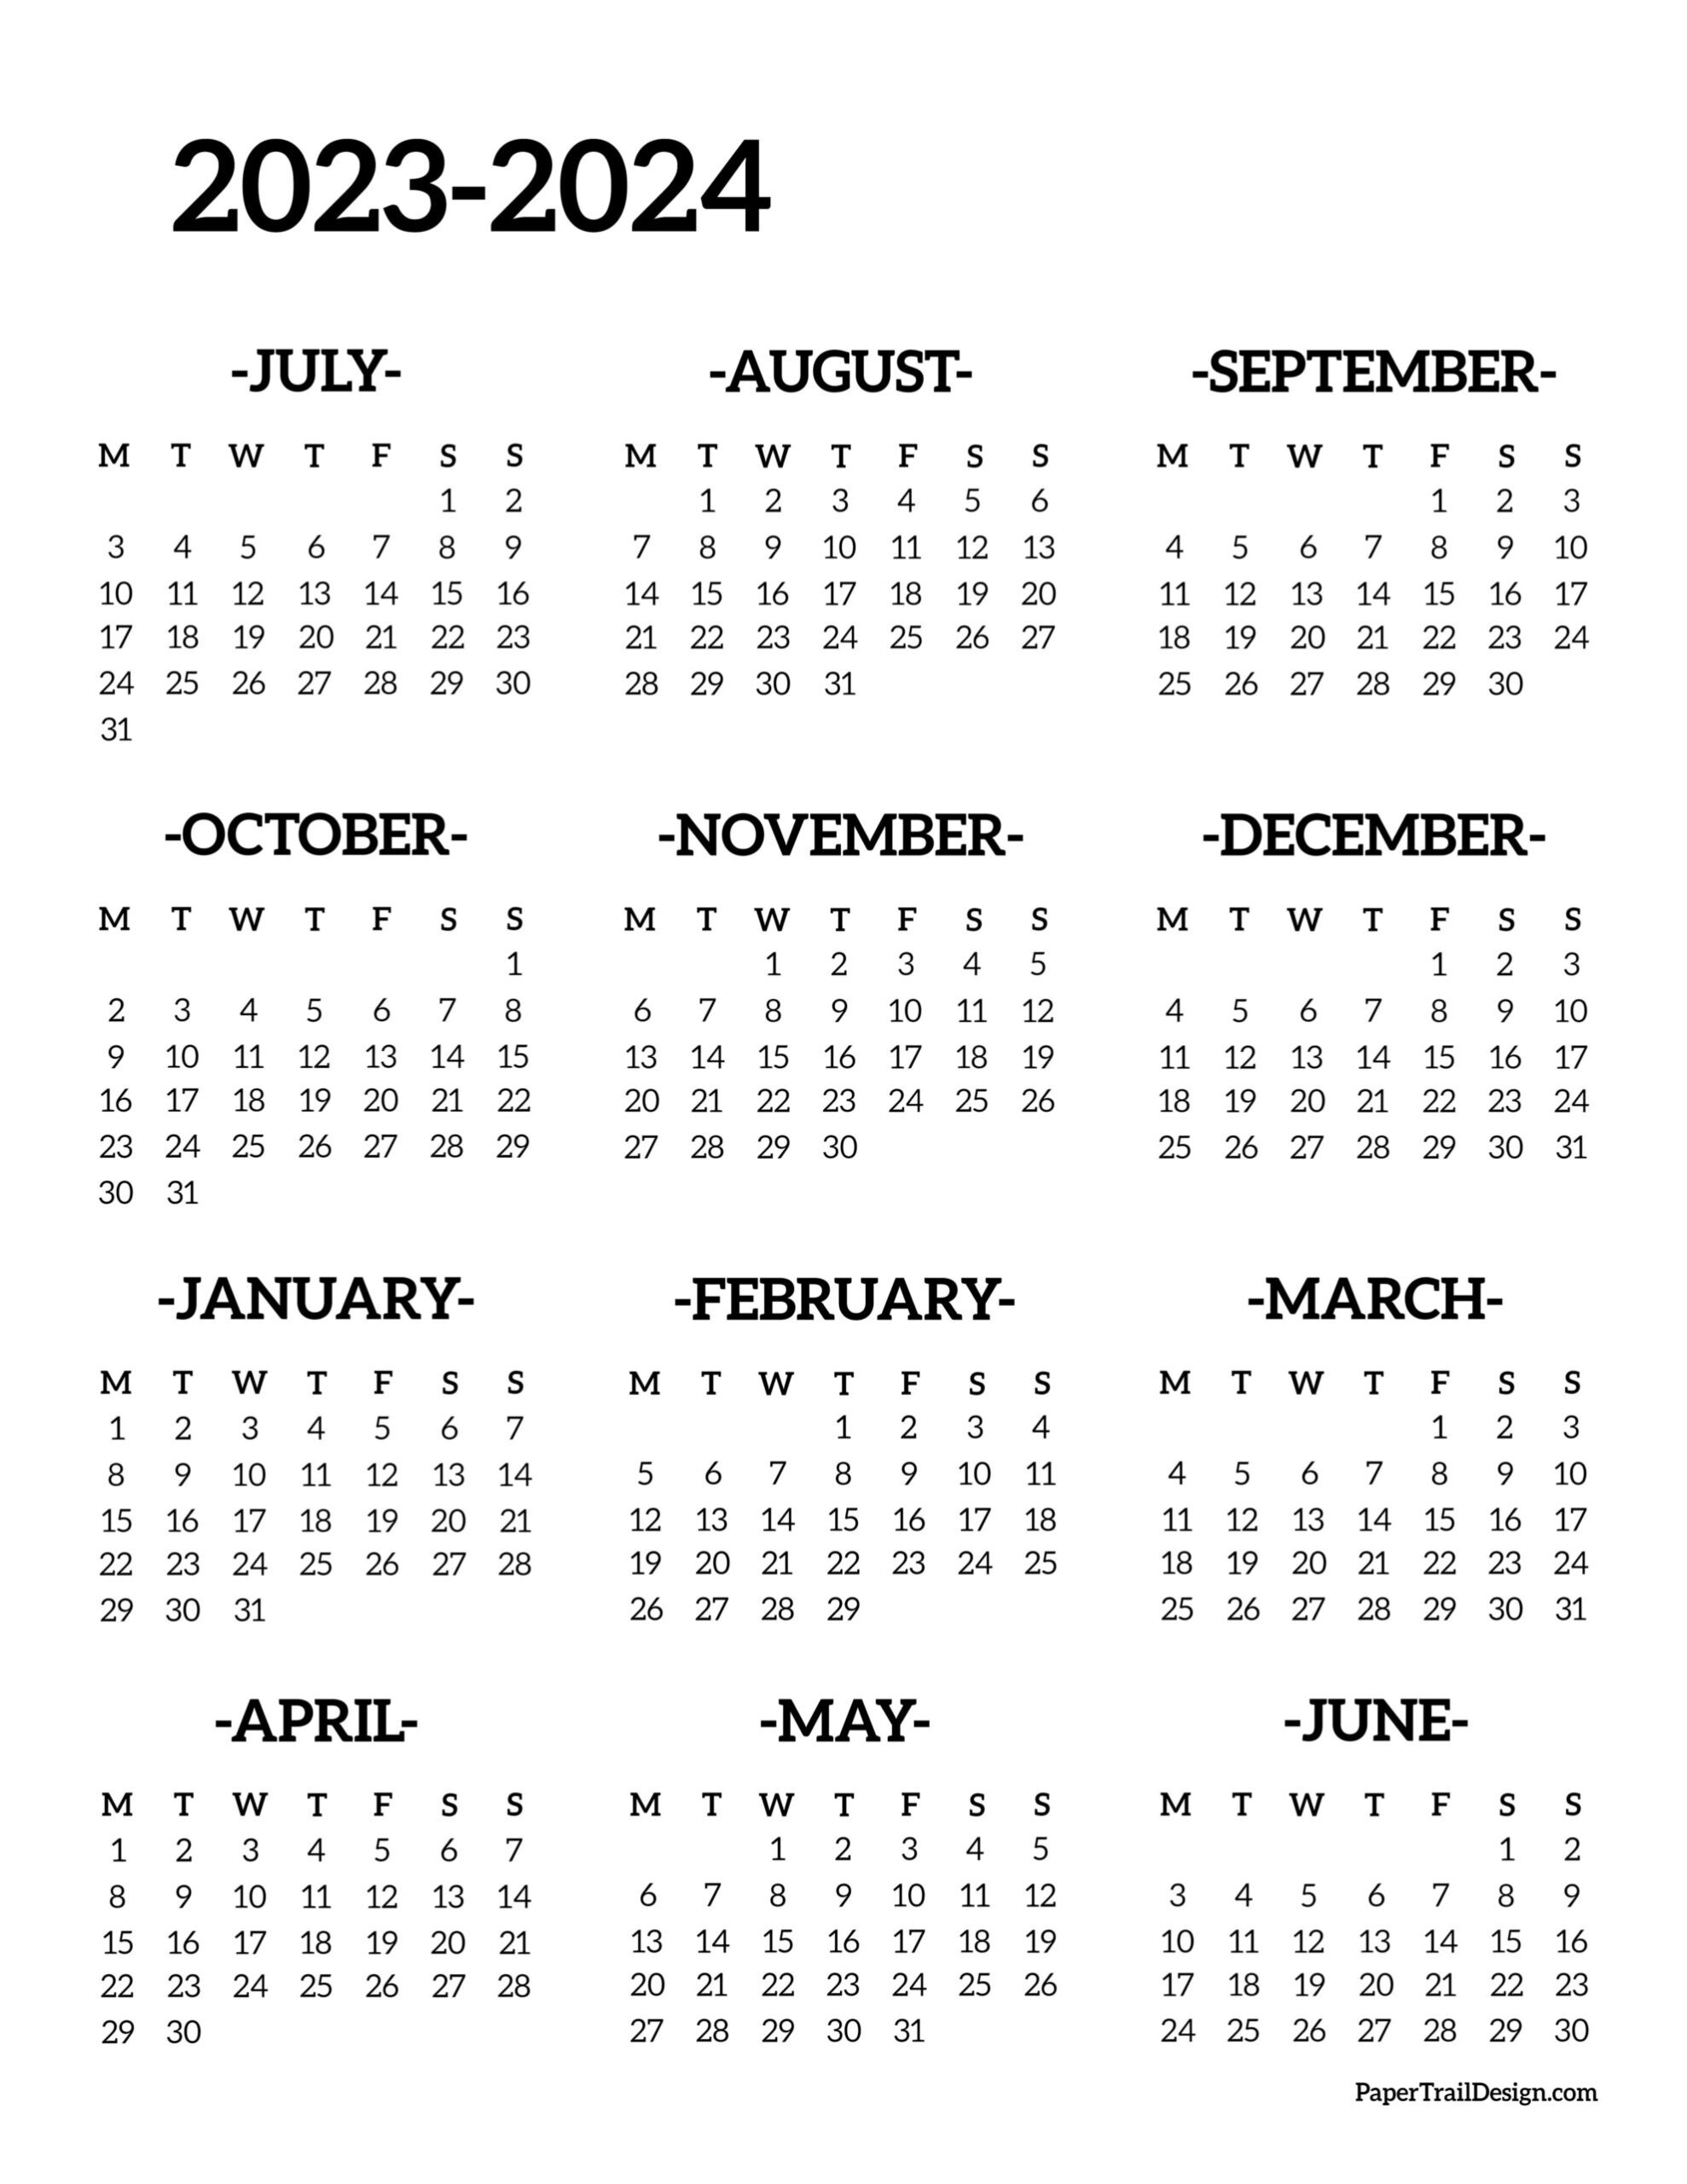 2023-2024 School Year Calendar Free Printable - Paper Trail Design within December 2023 To June 2024 Calendar